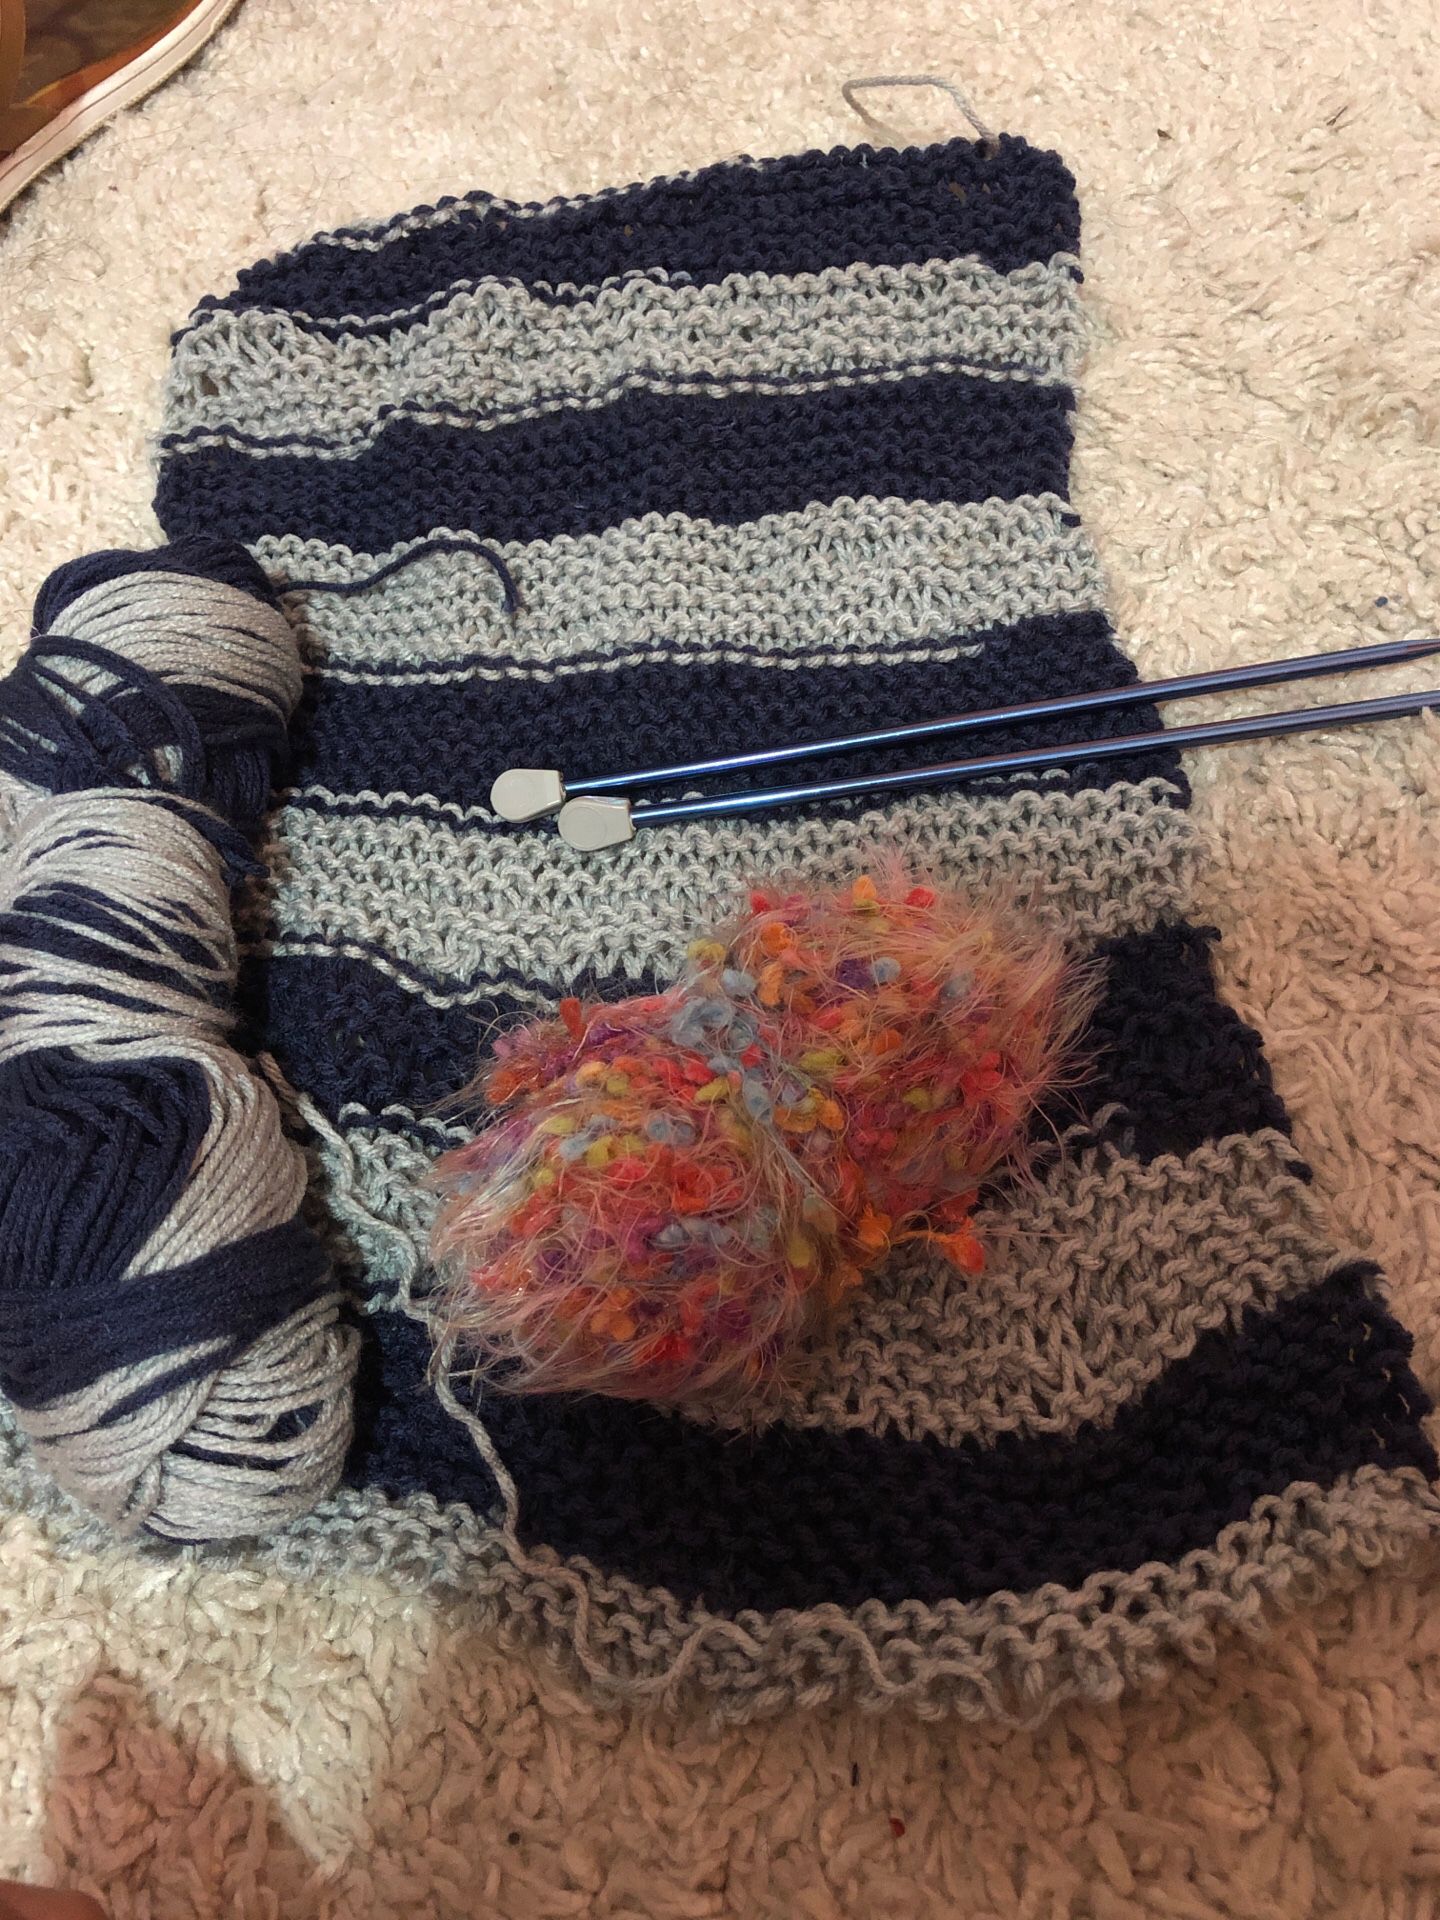 Knitting supplies, yarn, knitting needles